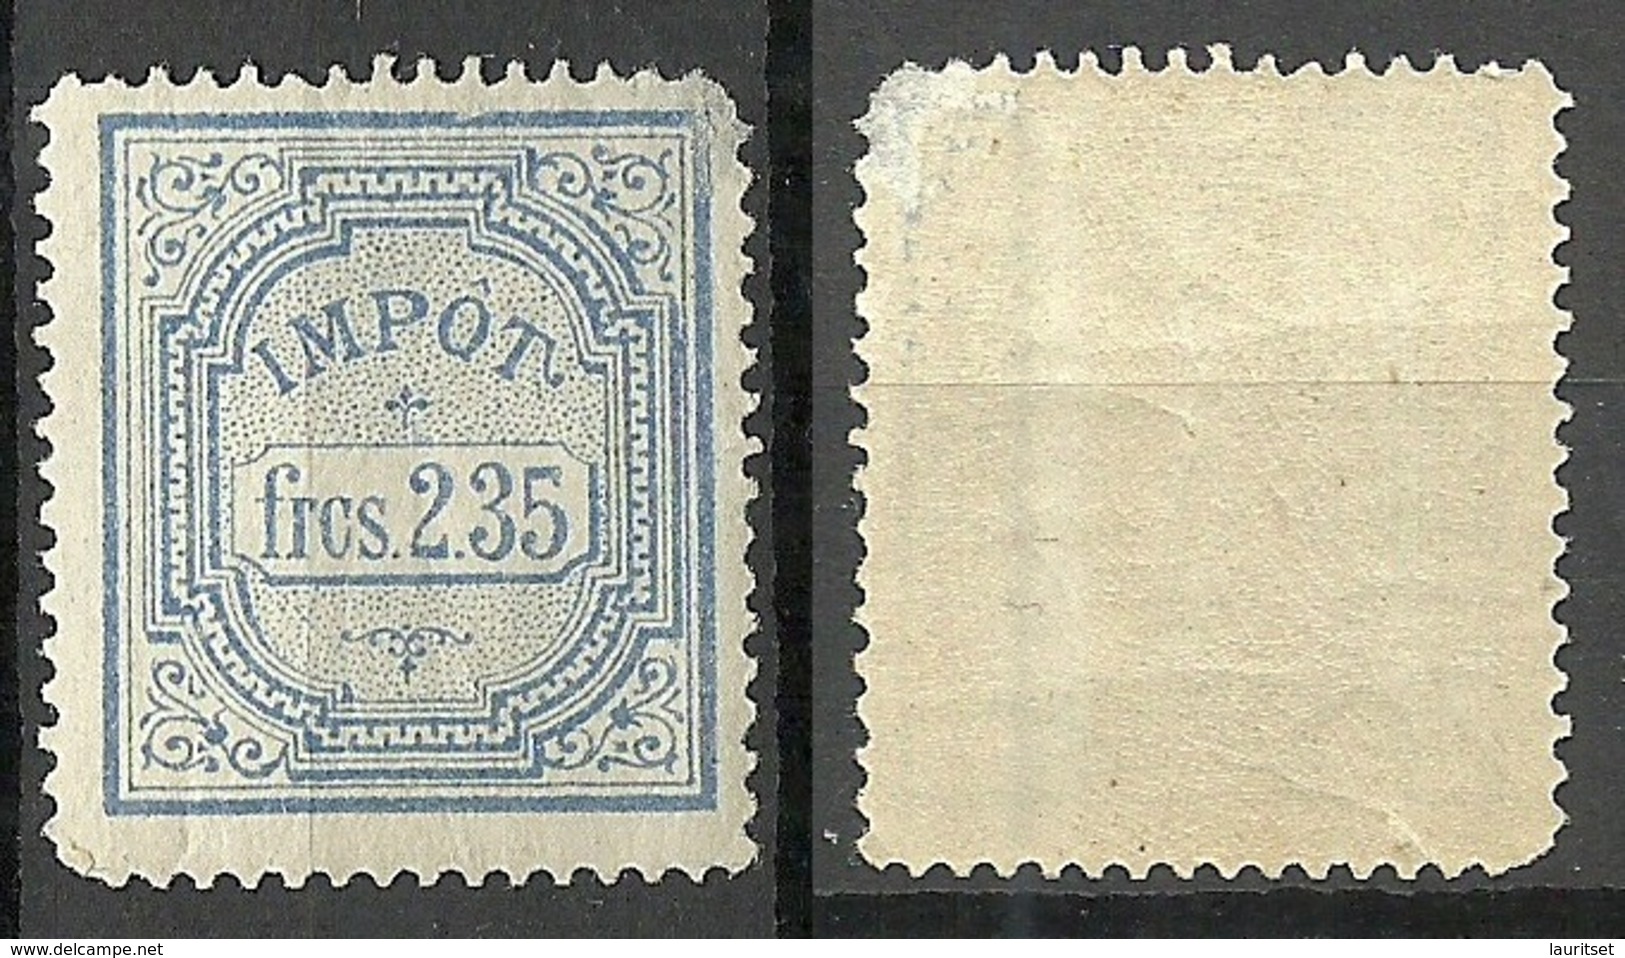 IMPOT Frcs 2.35 Unknown Revenue Tax Stamp MNH But A Bit Damaged Upper Left Corner - Vignetten (Erinnophilie)